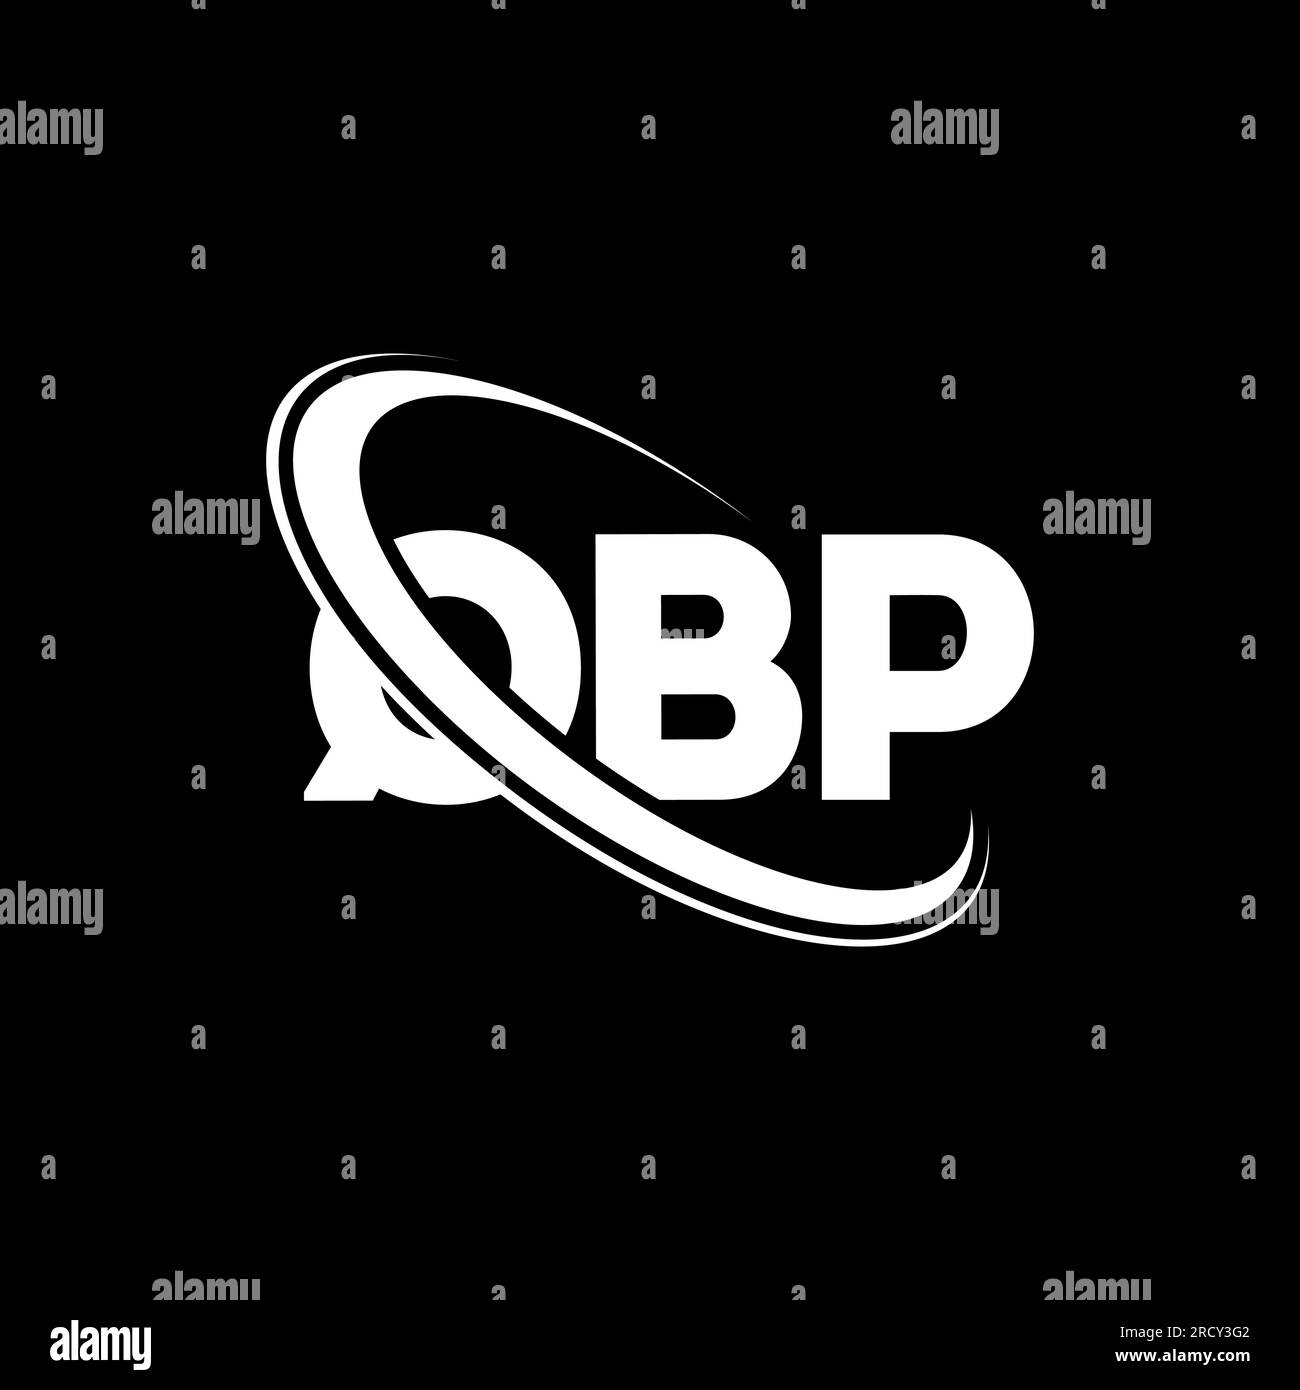 QBP logo. QBP letter. QBP letter logo design. Initials QBP logo linked with circle and uppercase monogram logo. QBP typography for technology, busines Stock Vector